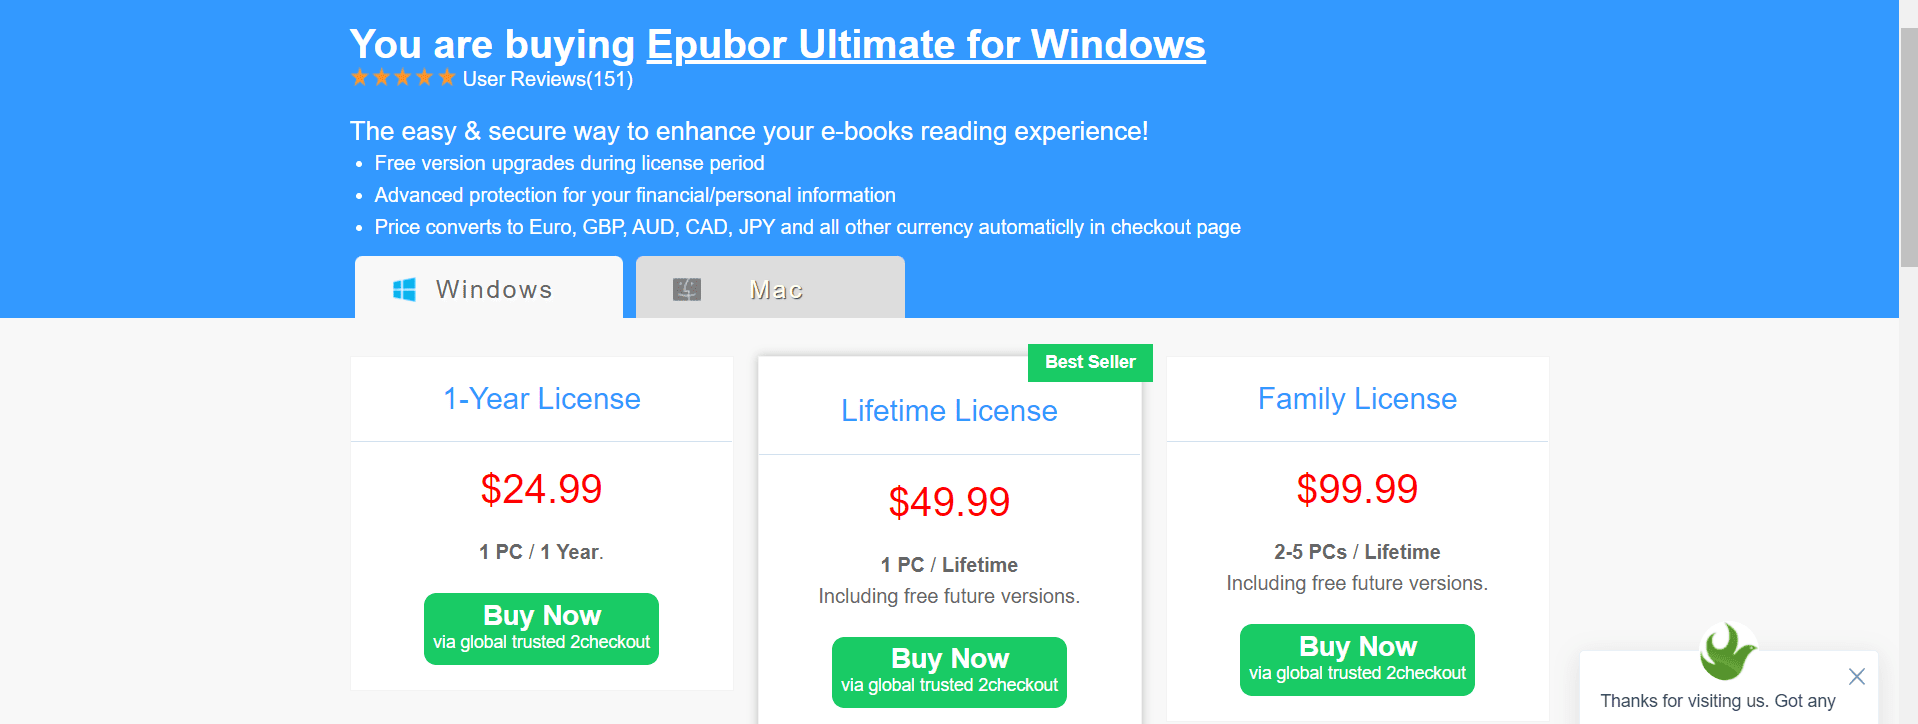 Epubir ultimate pricing discounts